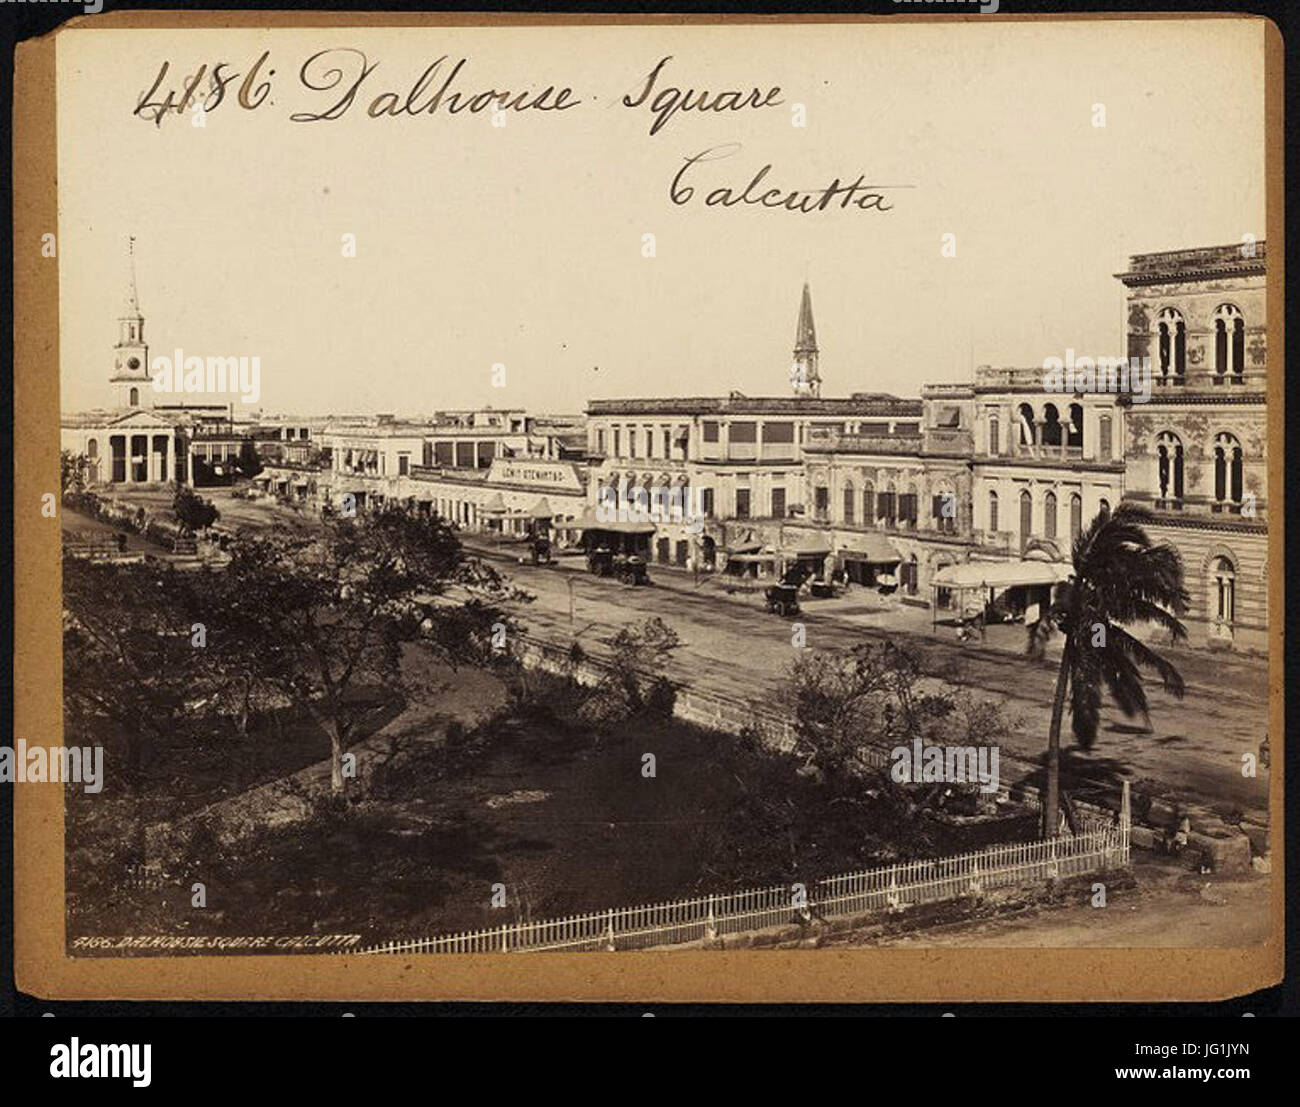 Dalhouse Square Calcutta by Francis Frith Stock Photo